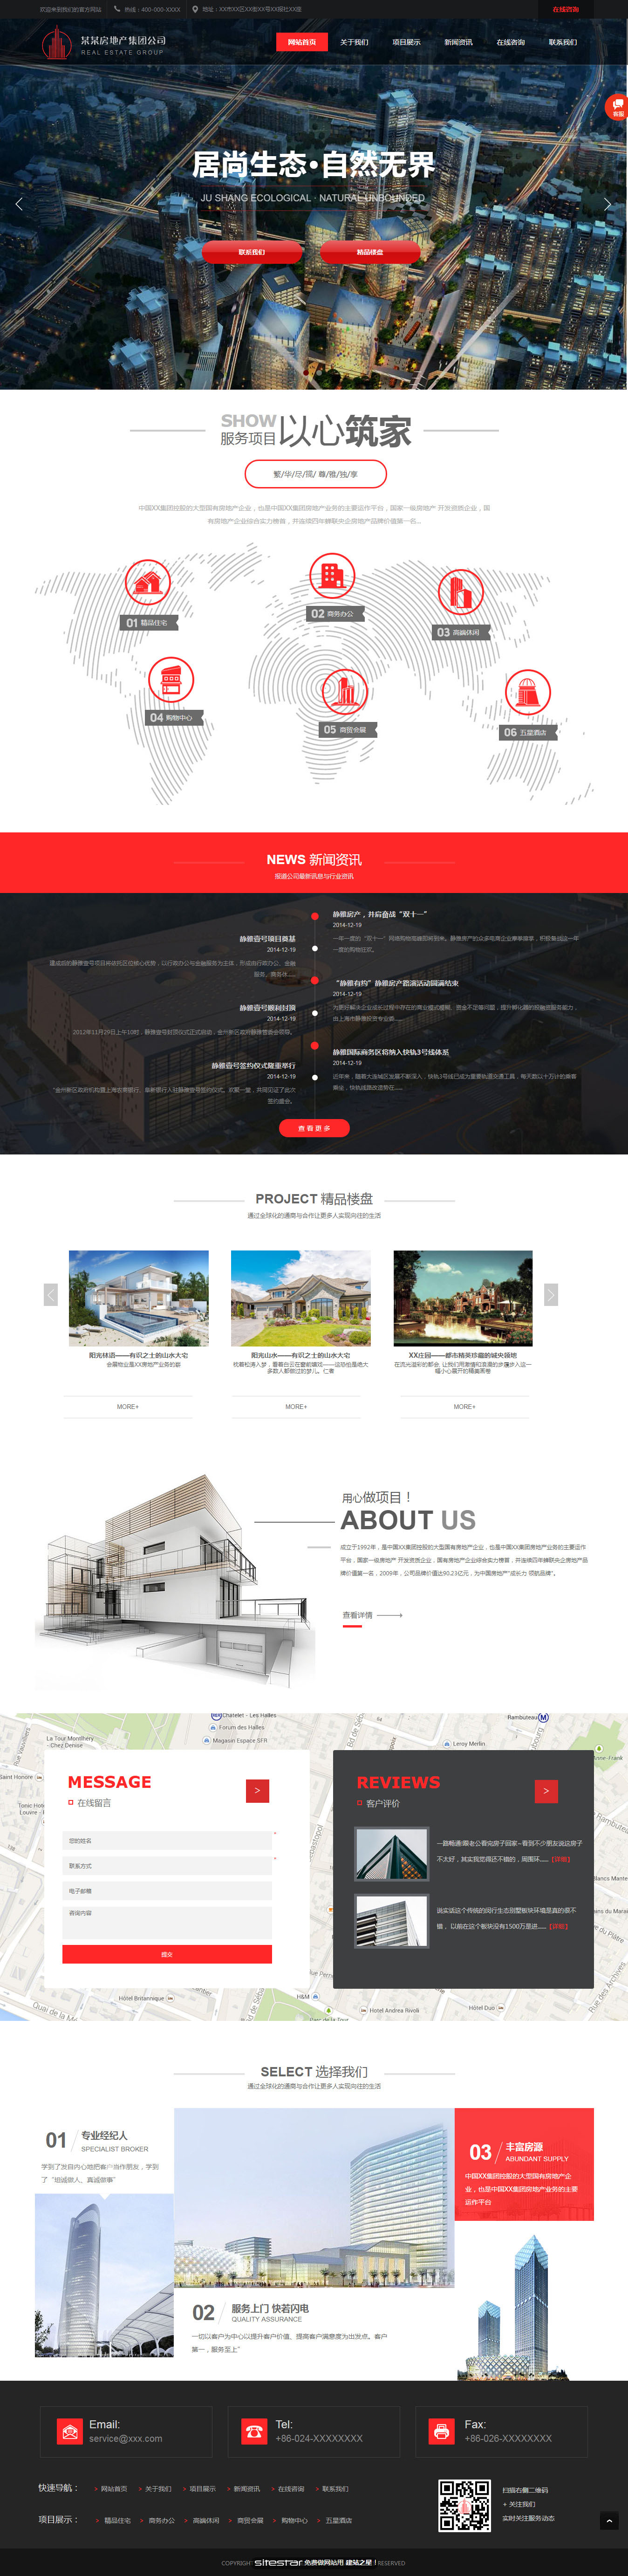 房地产网站模板-real-estate-551